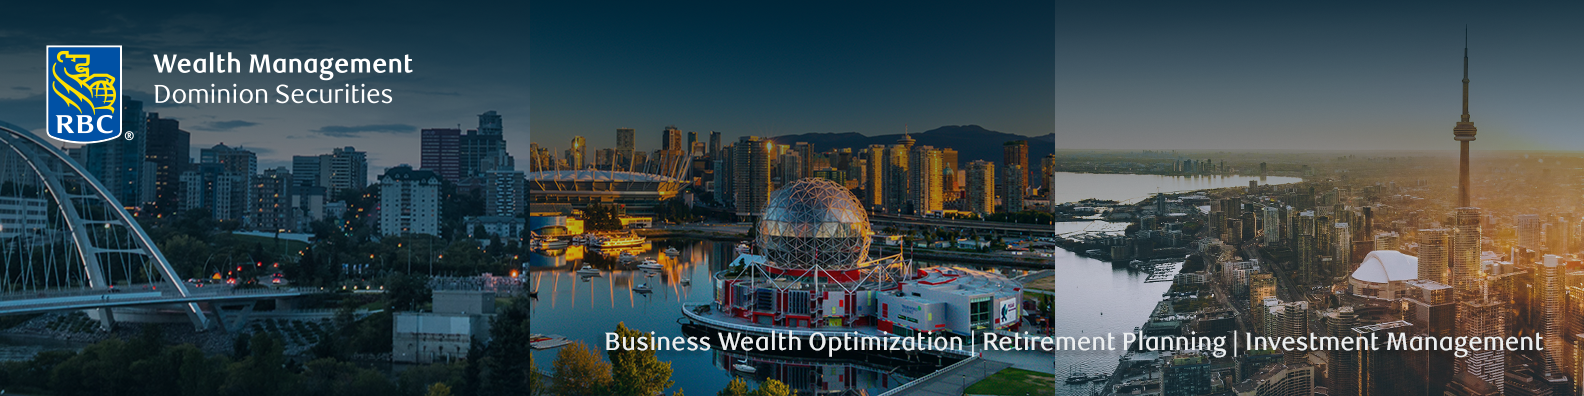 Business Wealth Optimization | Retirement Planning | Investment Management